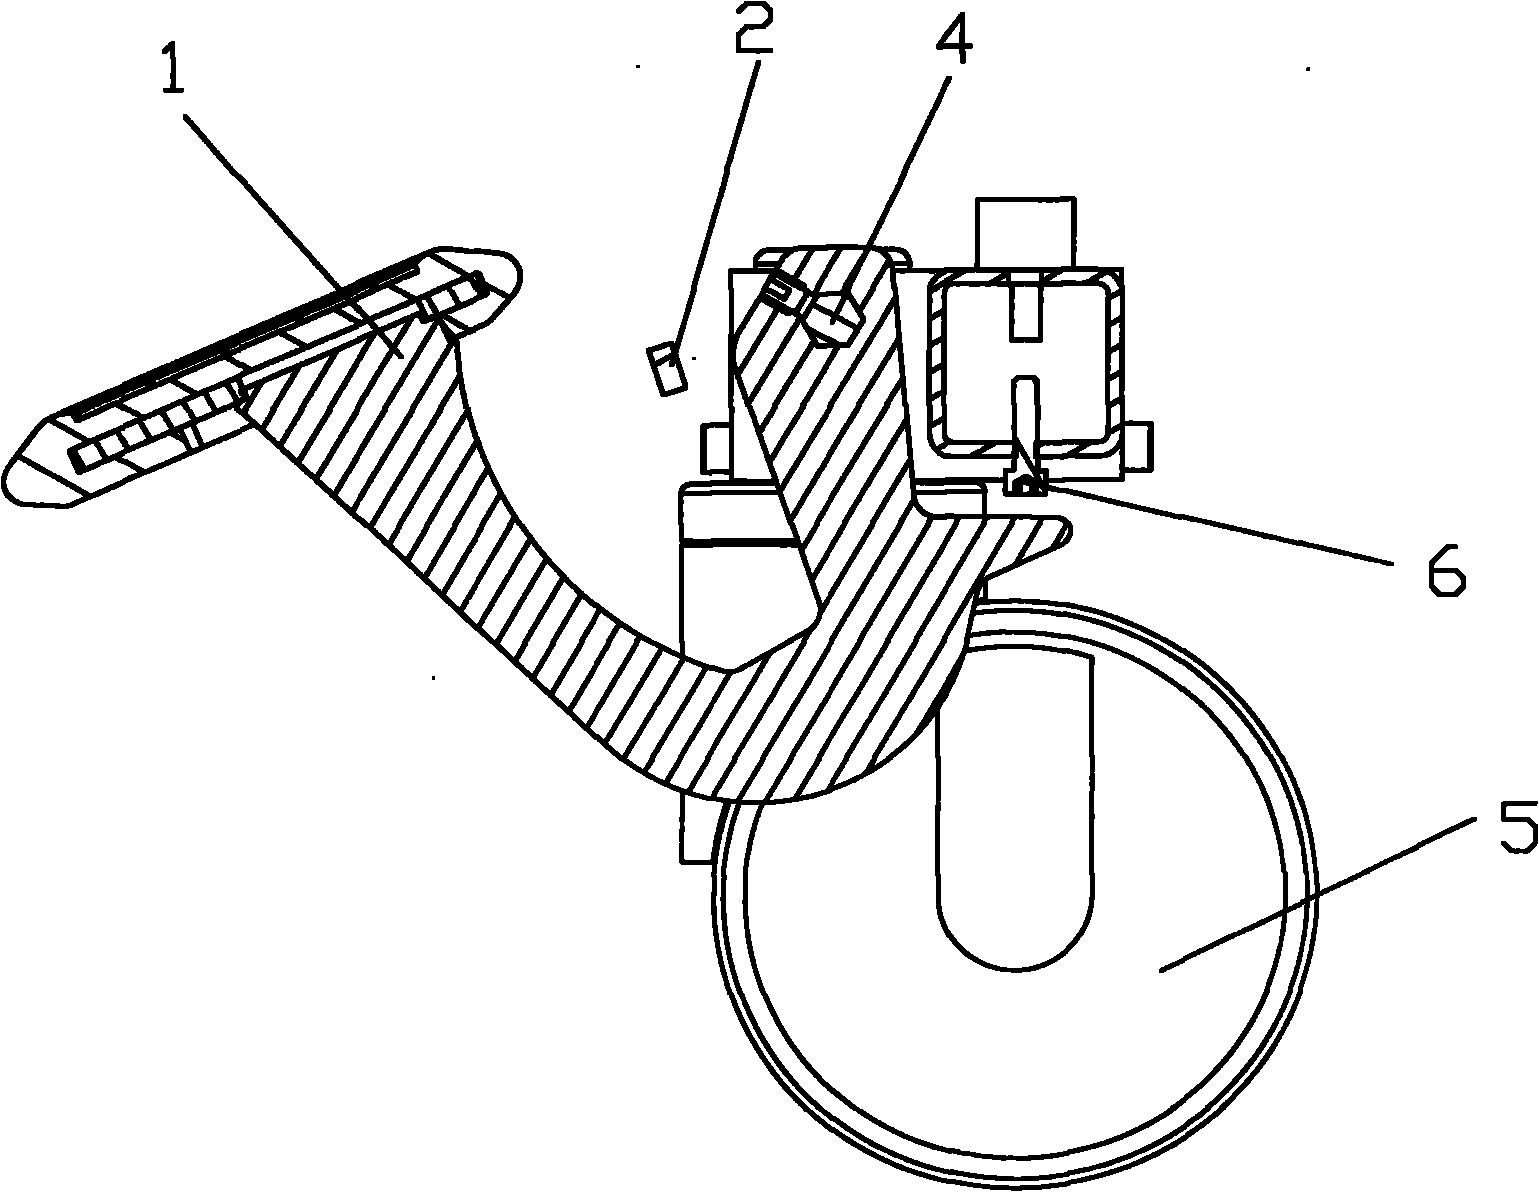 Integral brake control mechanism for operating bed